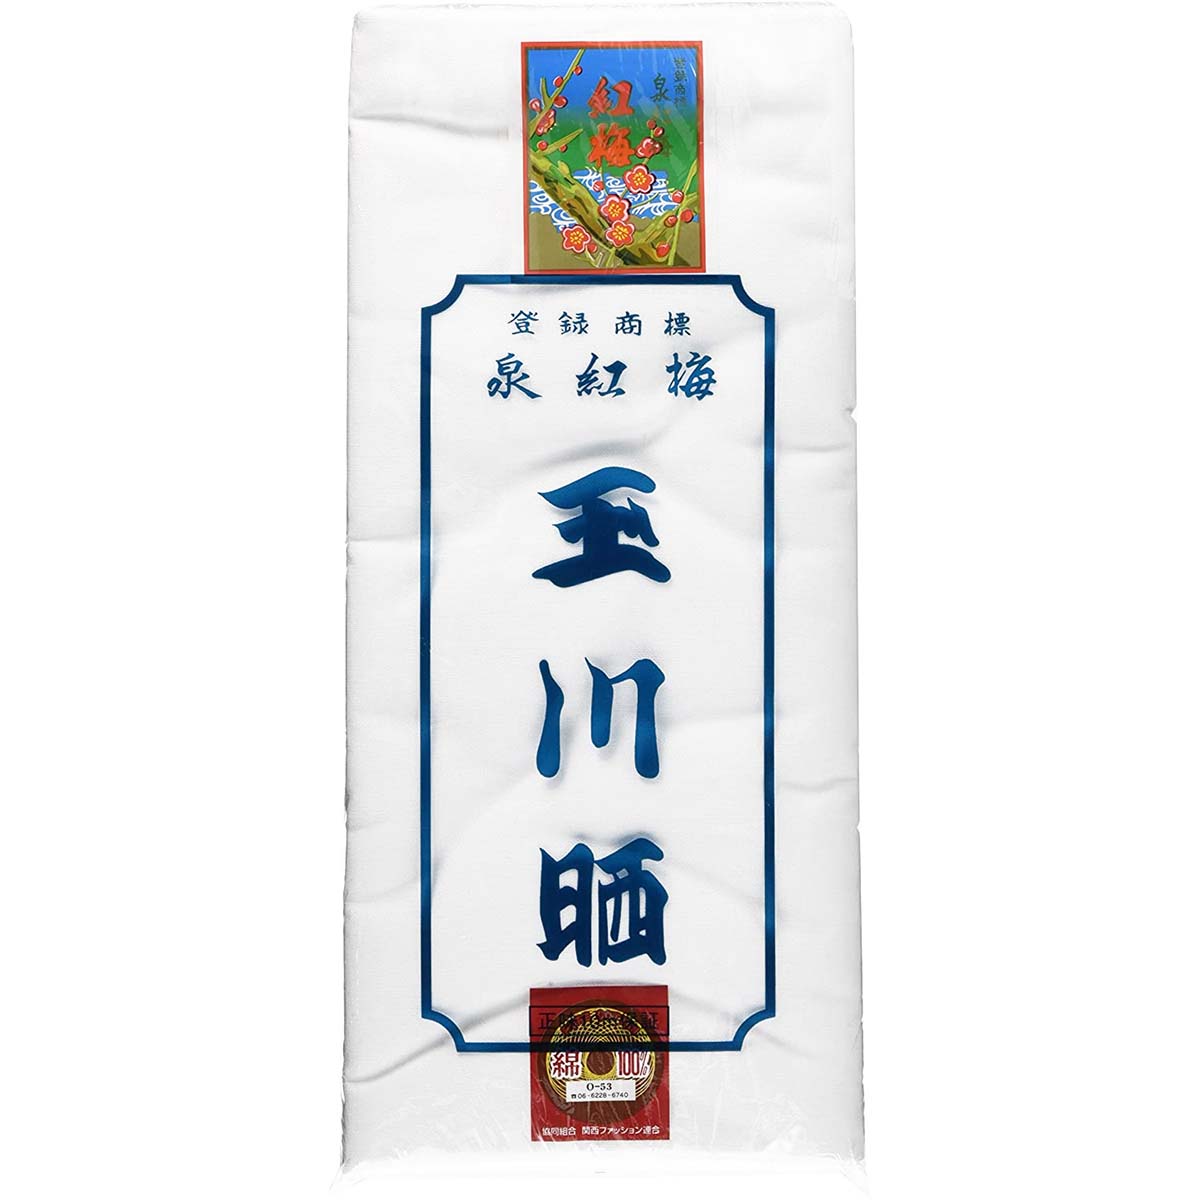 Daruma thin sashiko thread, water blue (#226) - Maydel